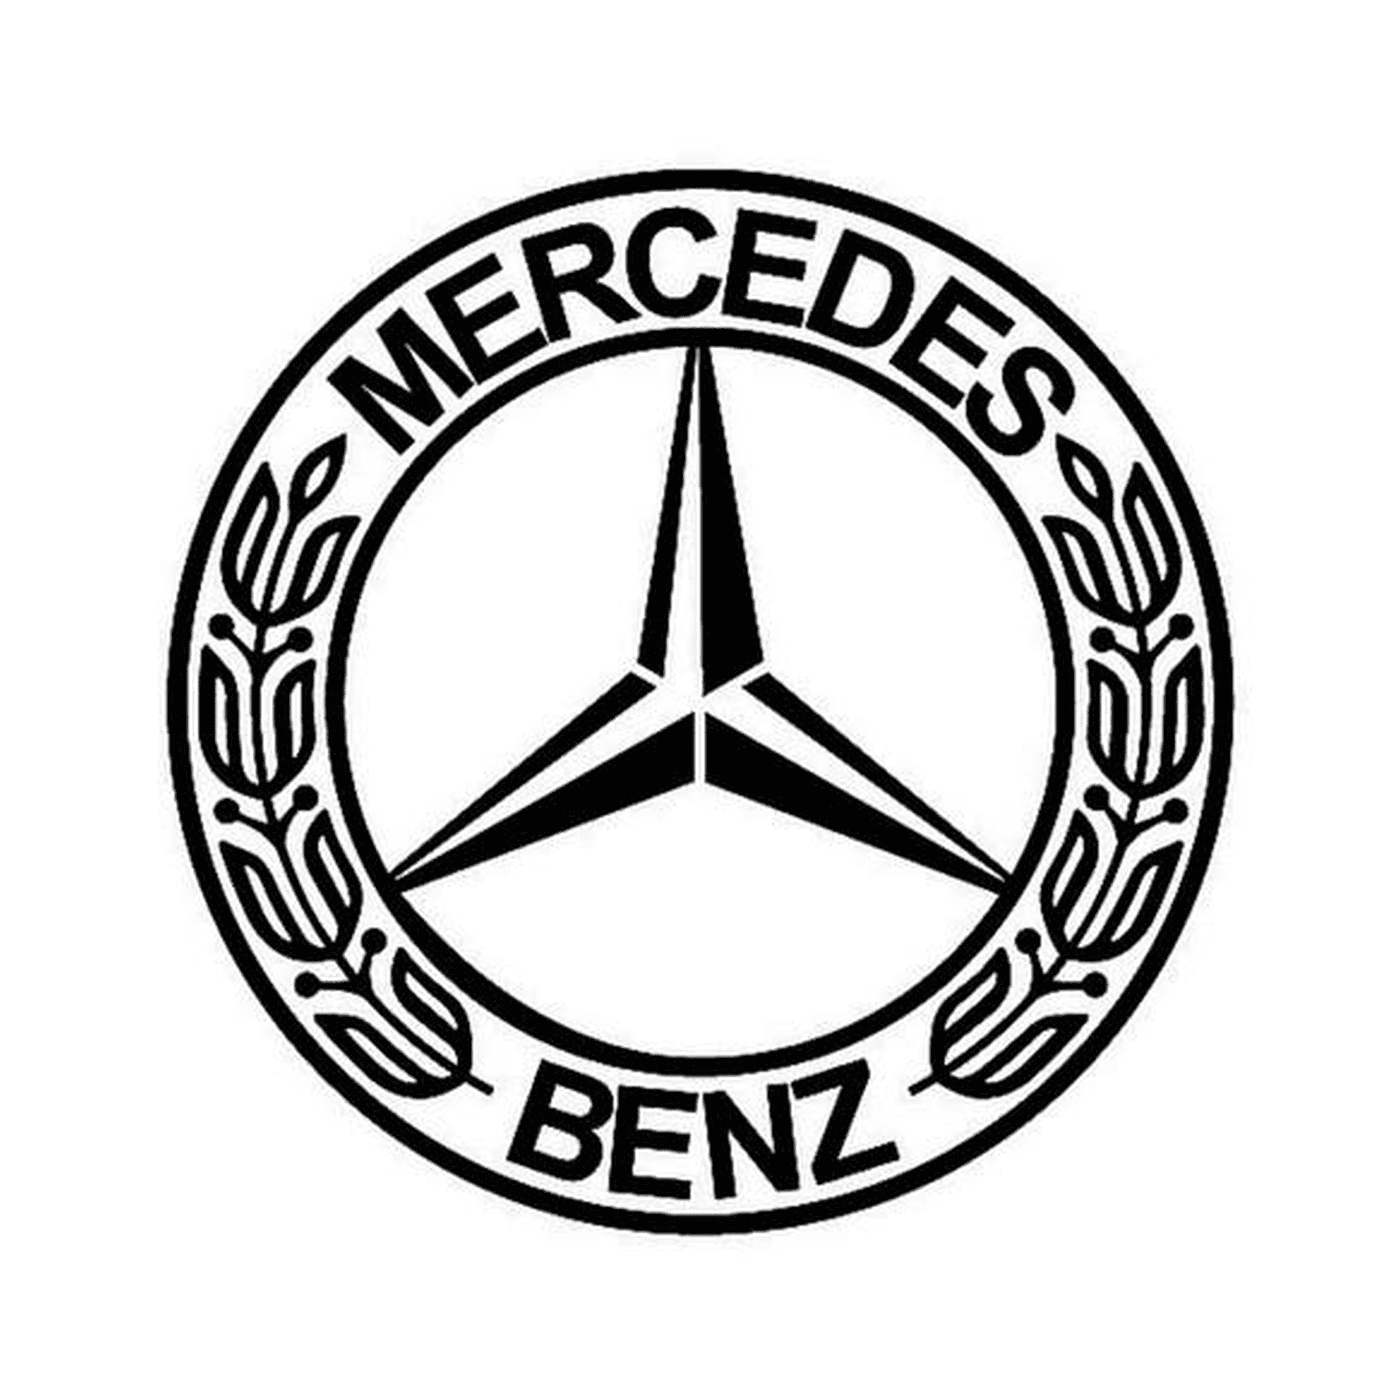   Logo Mercedes distinctif 